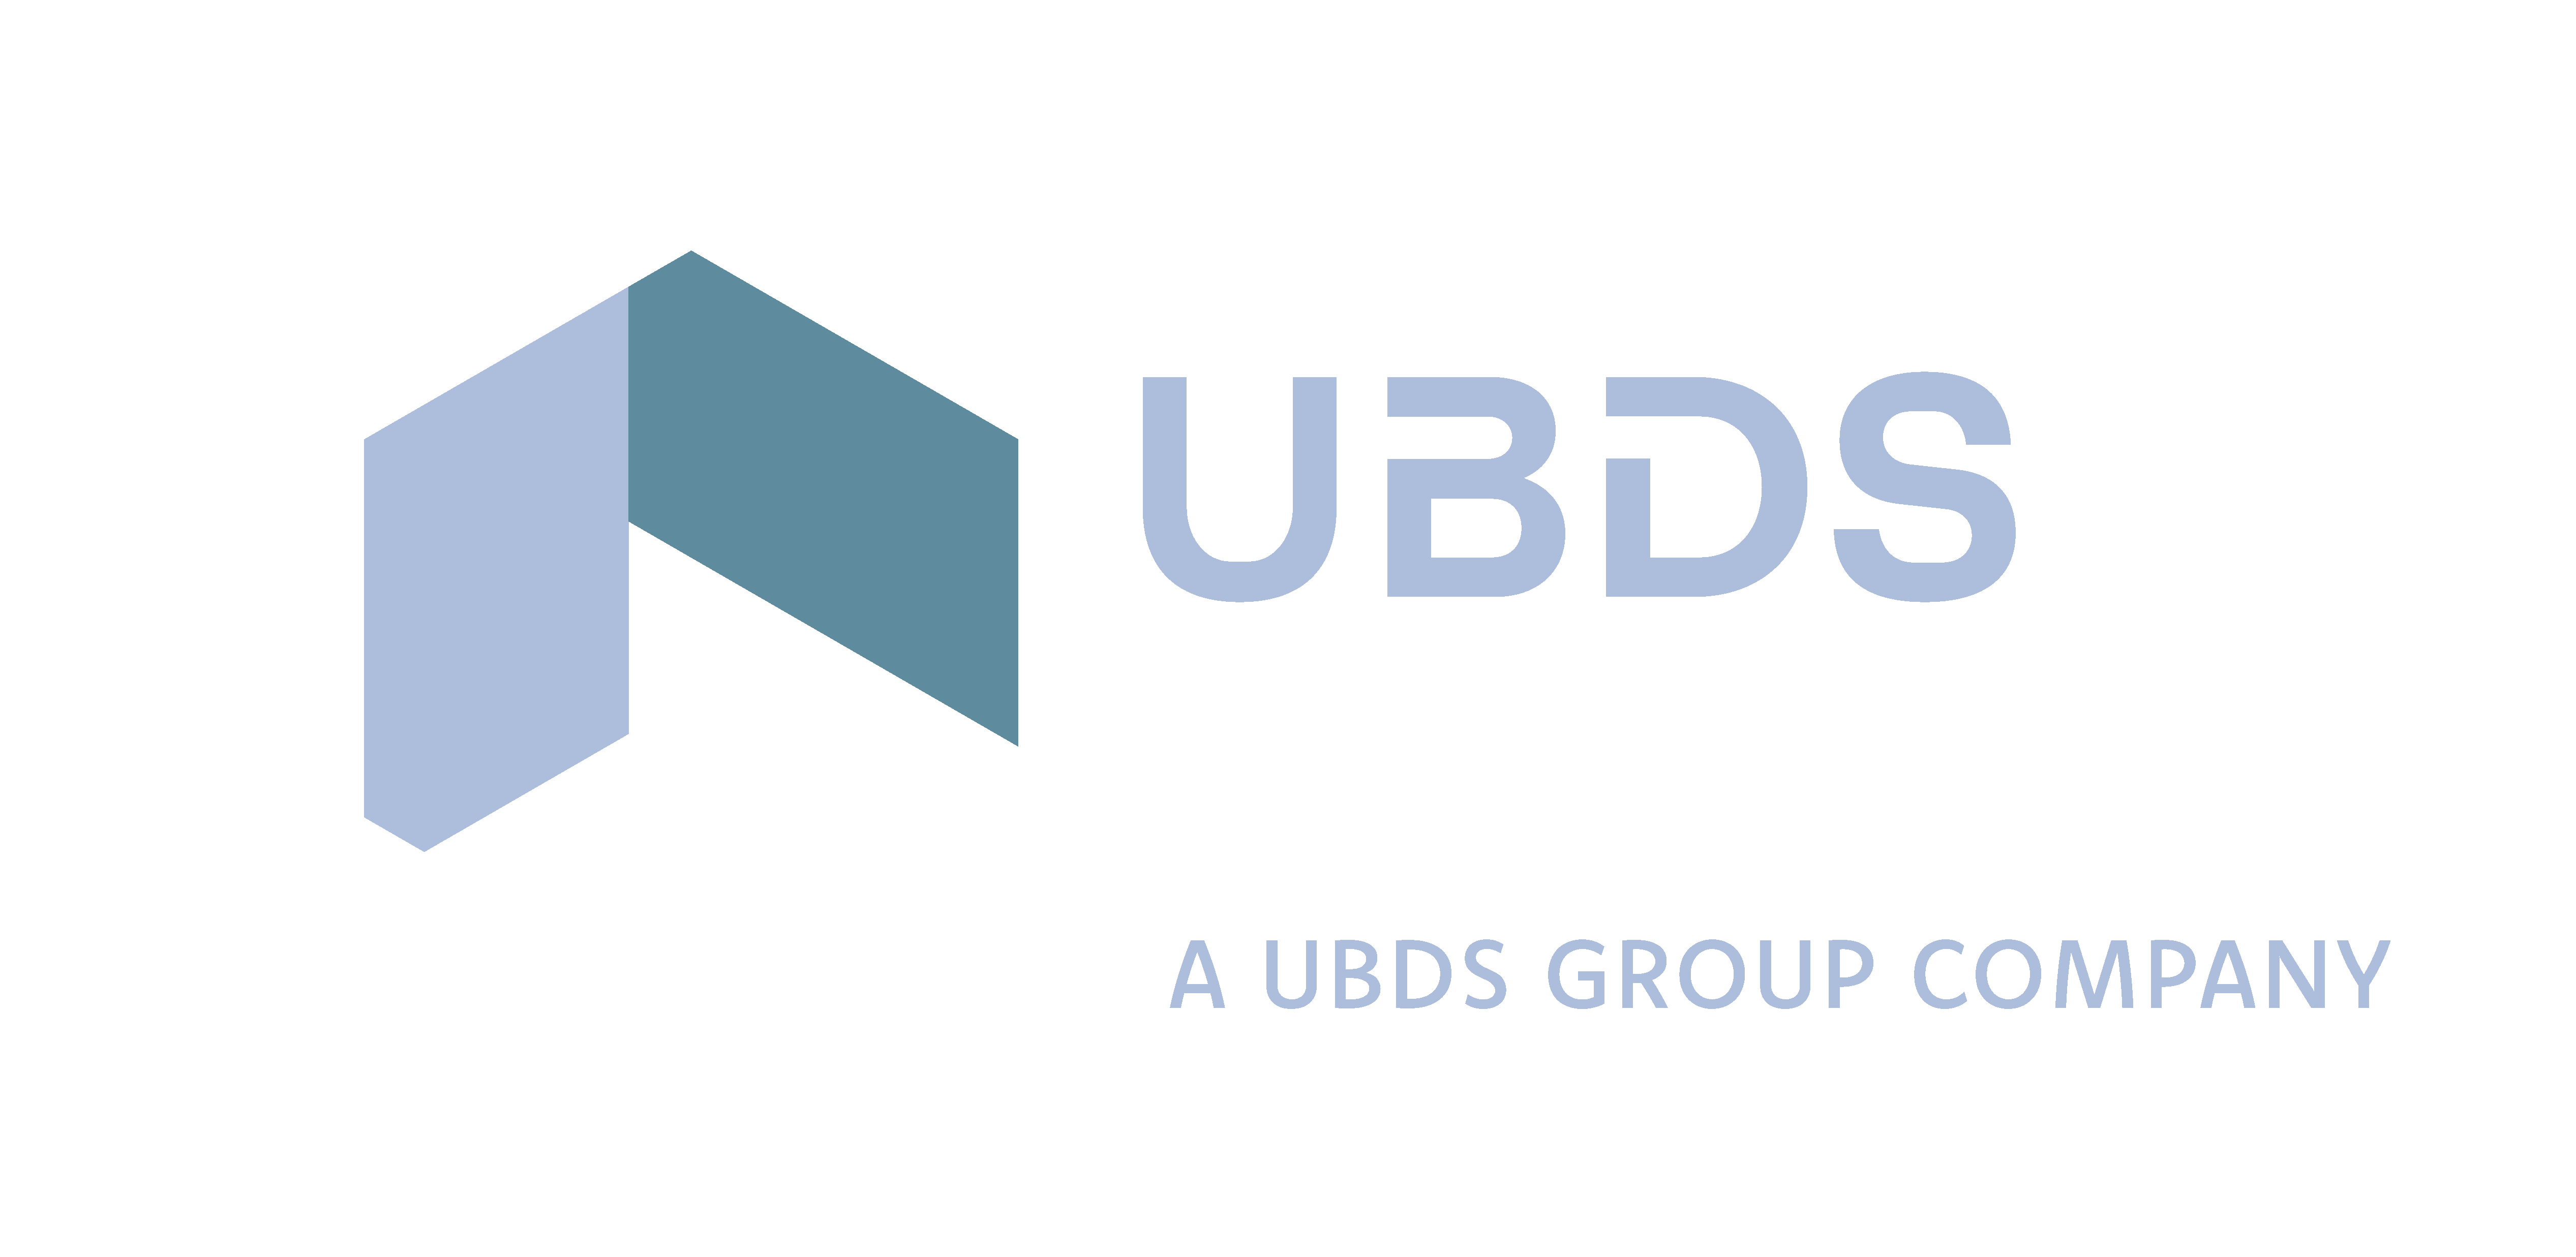 UBDS Digital Logo